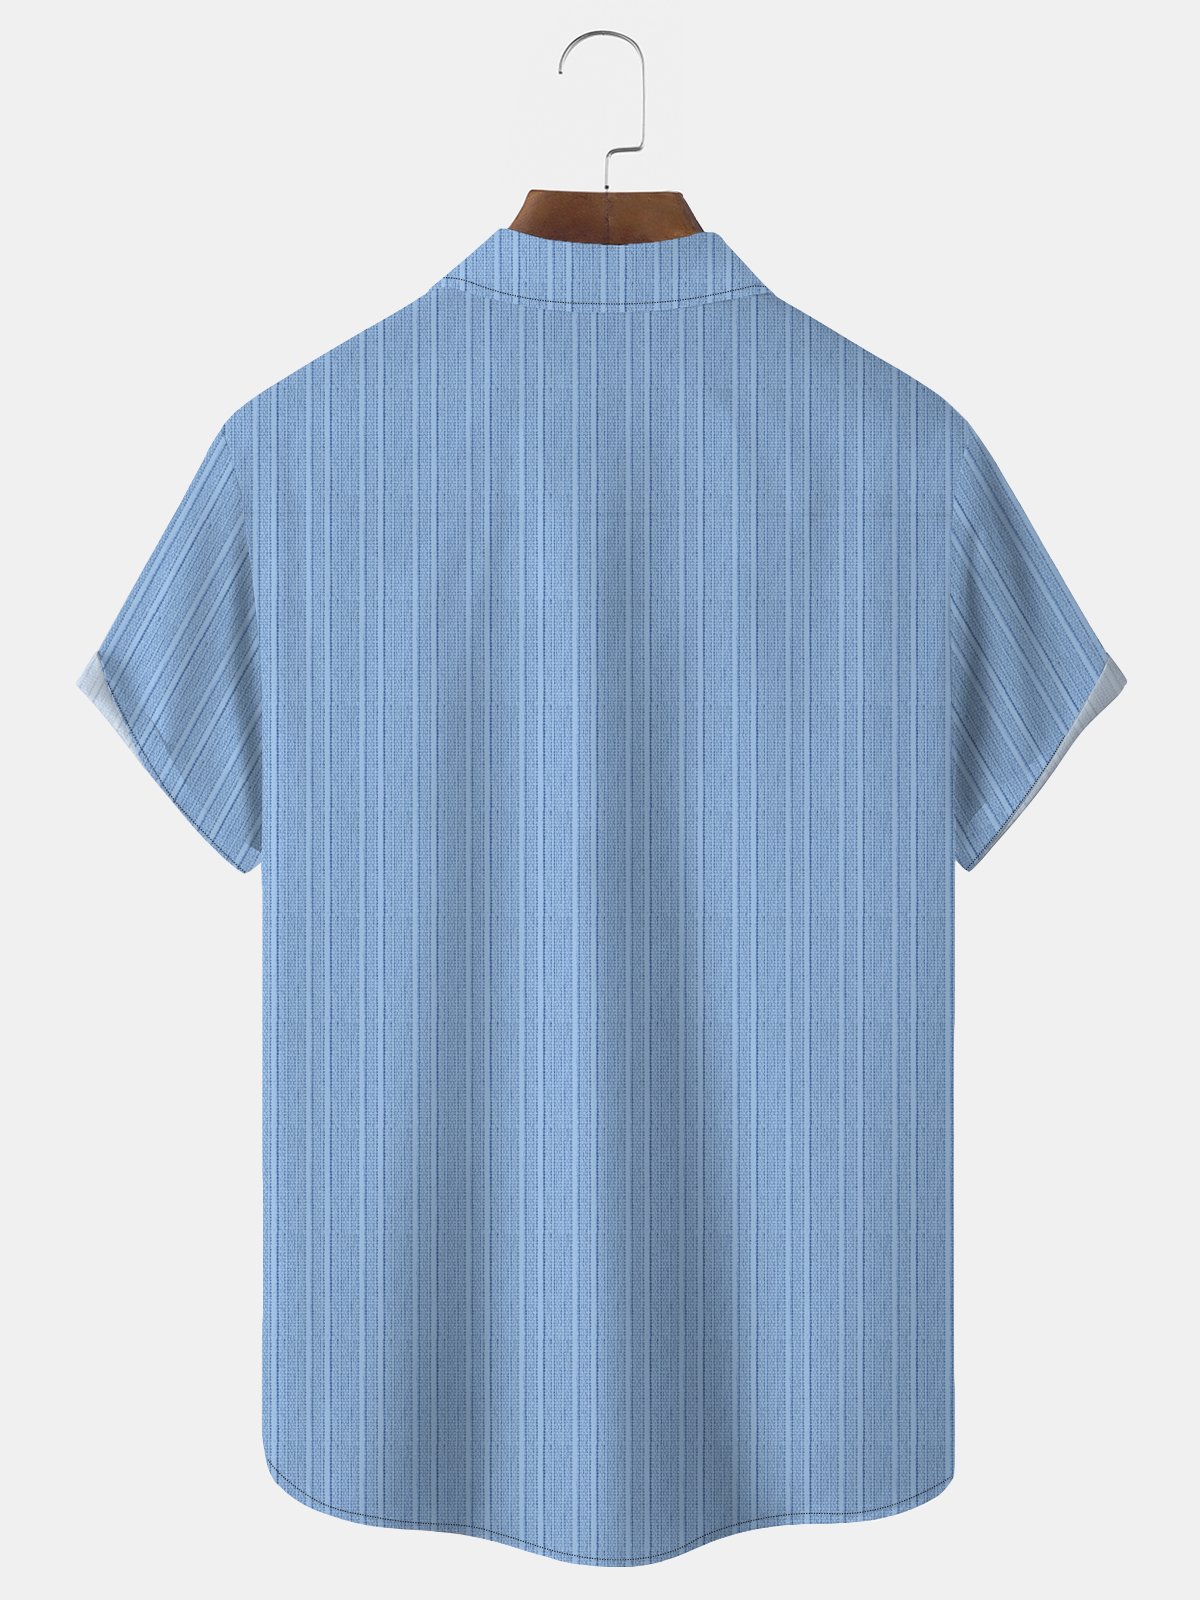 Royaura Striped Printed Men's Button Pocket Shirt